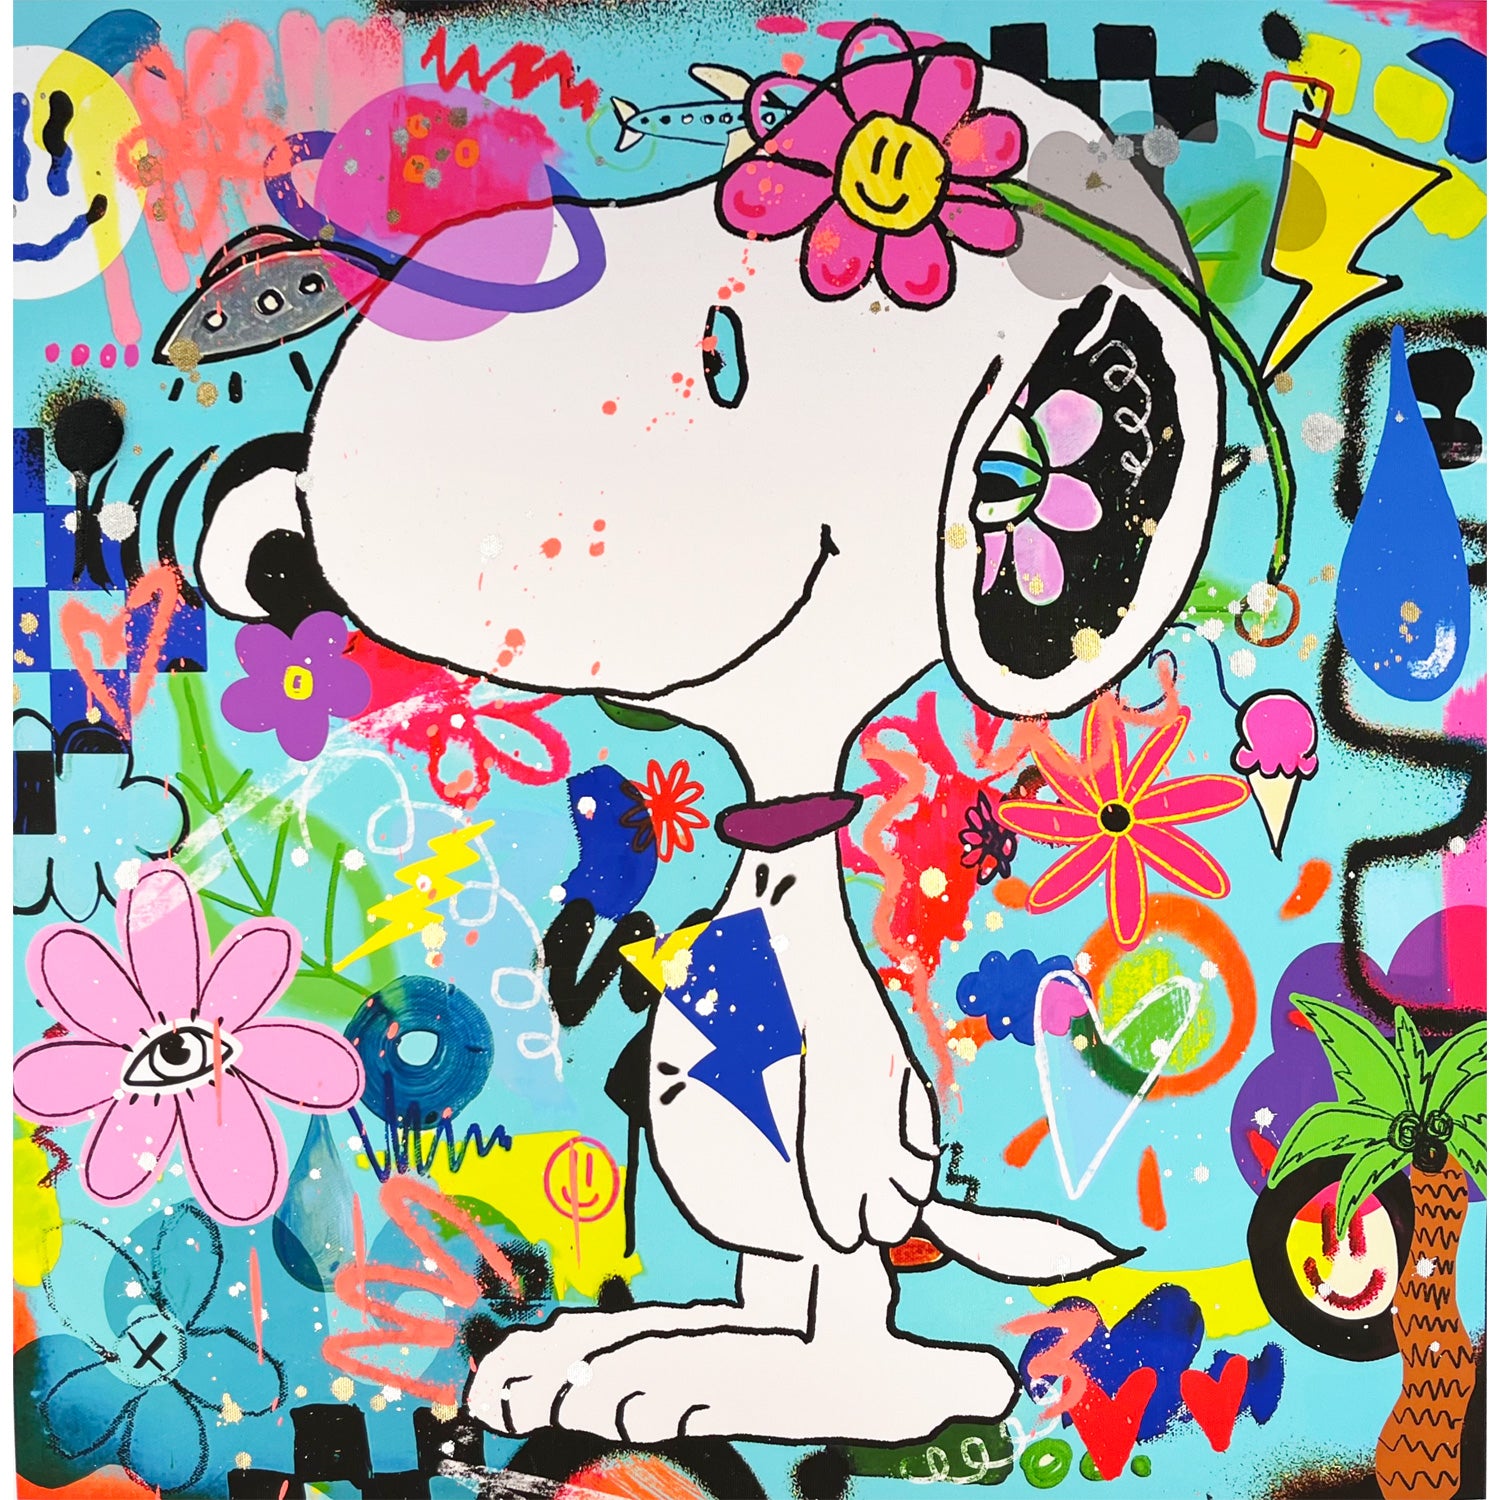 Chris Solcz - Snoopy Ed. 1/5, 24" x 24"